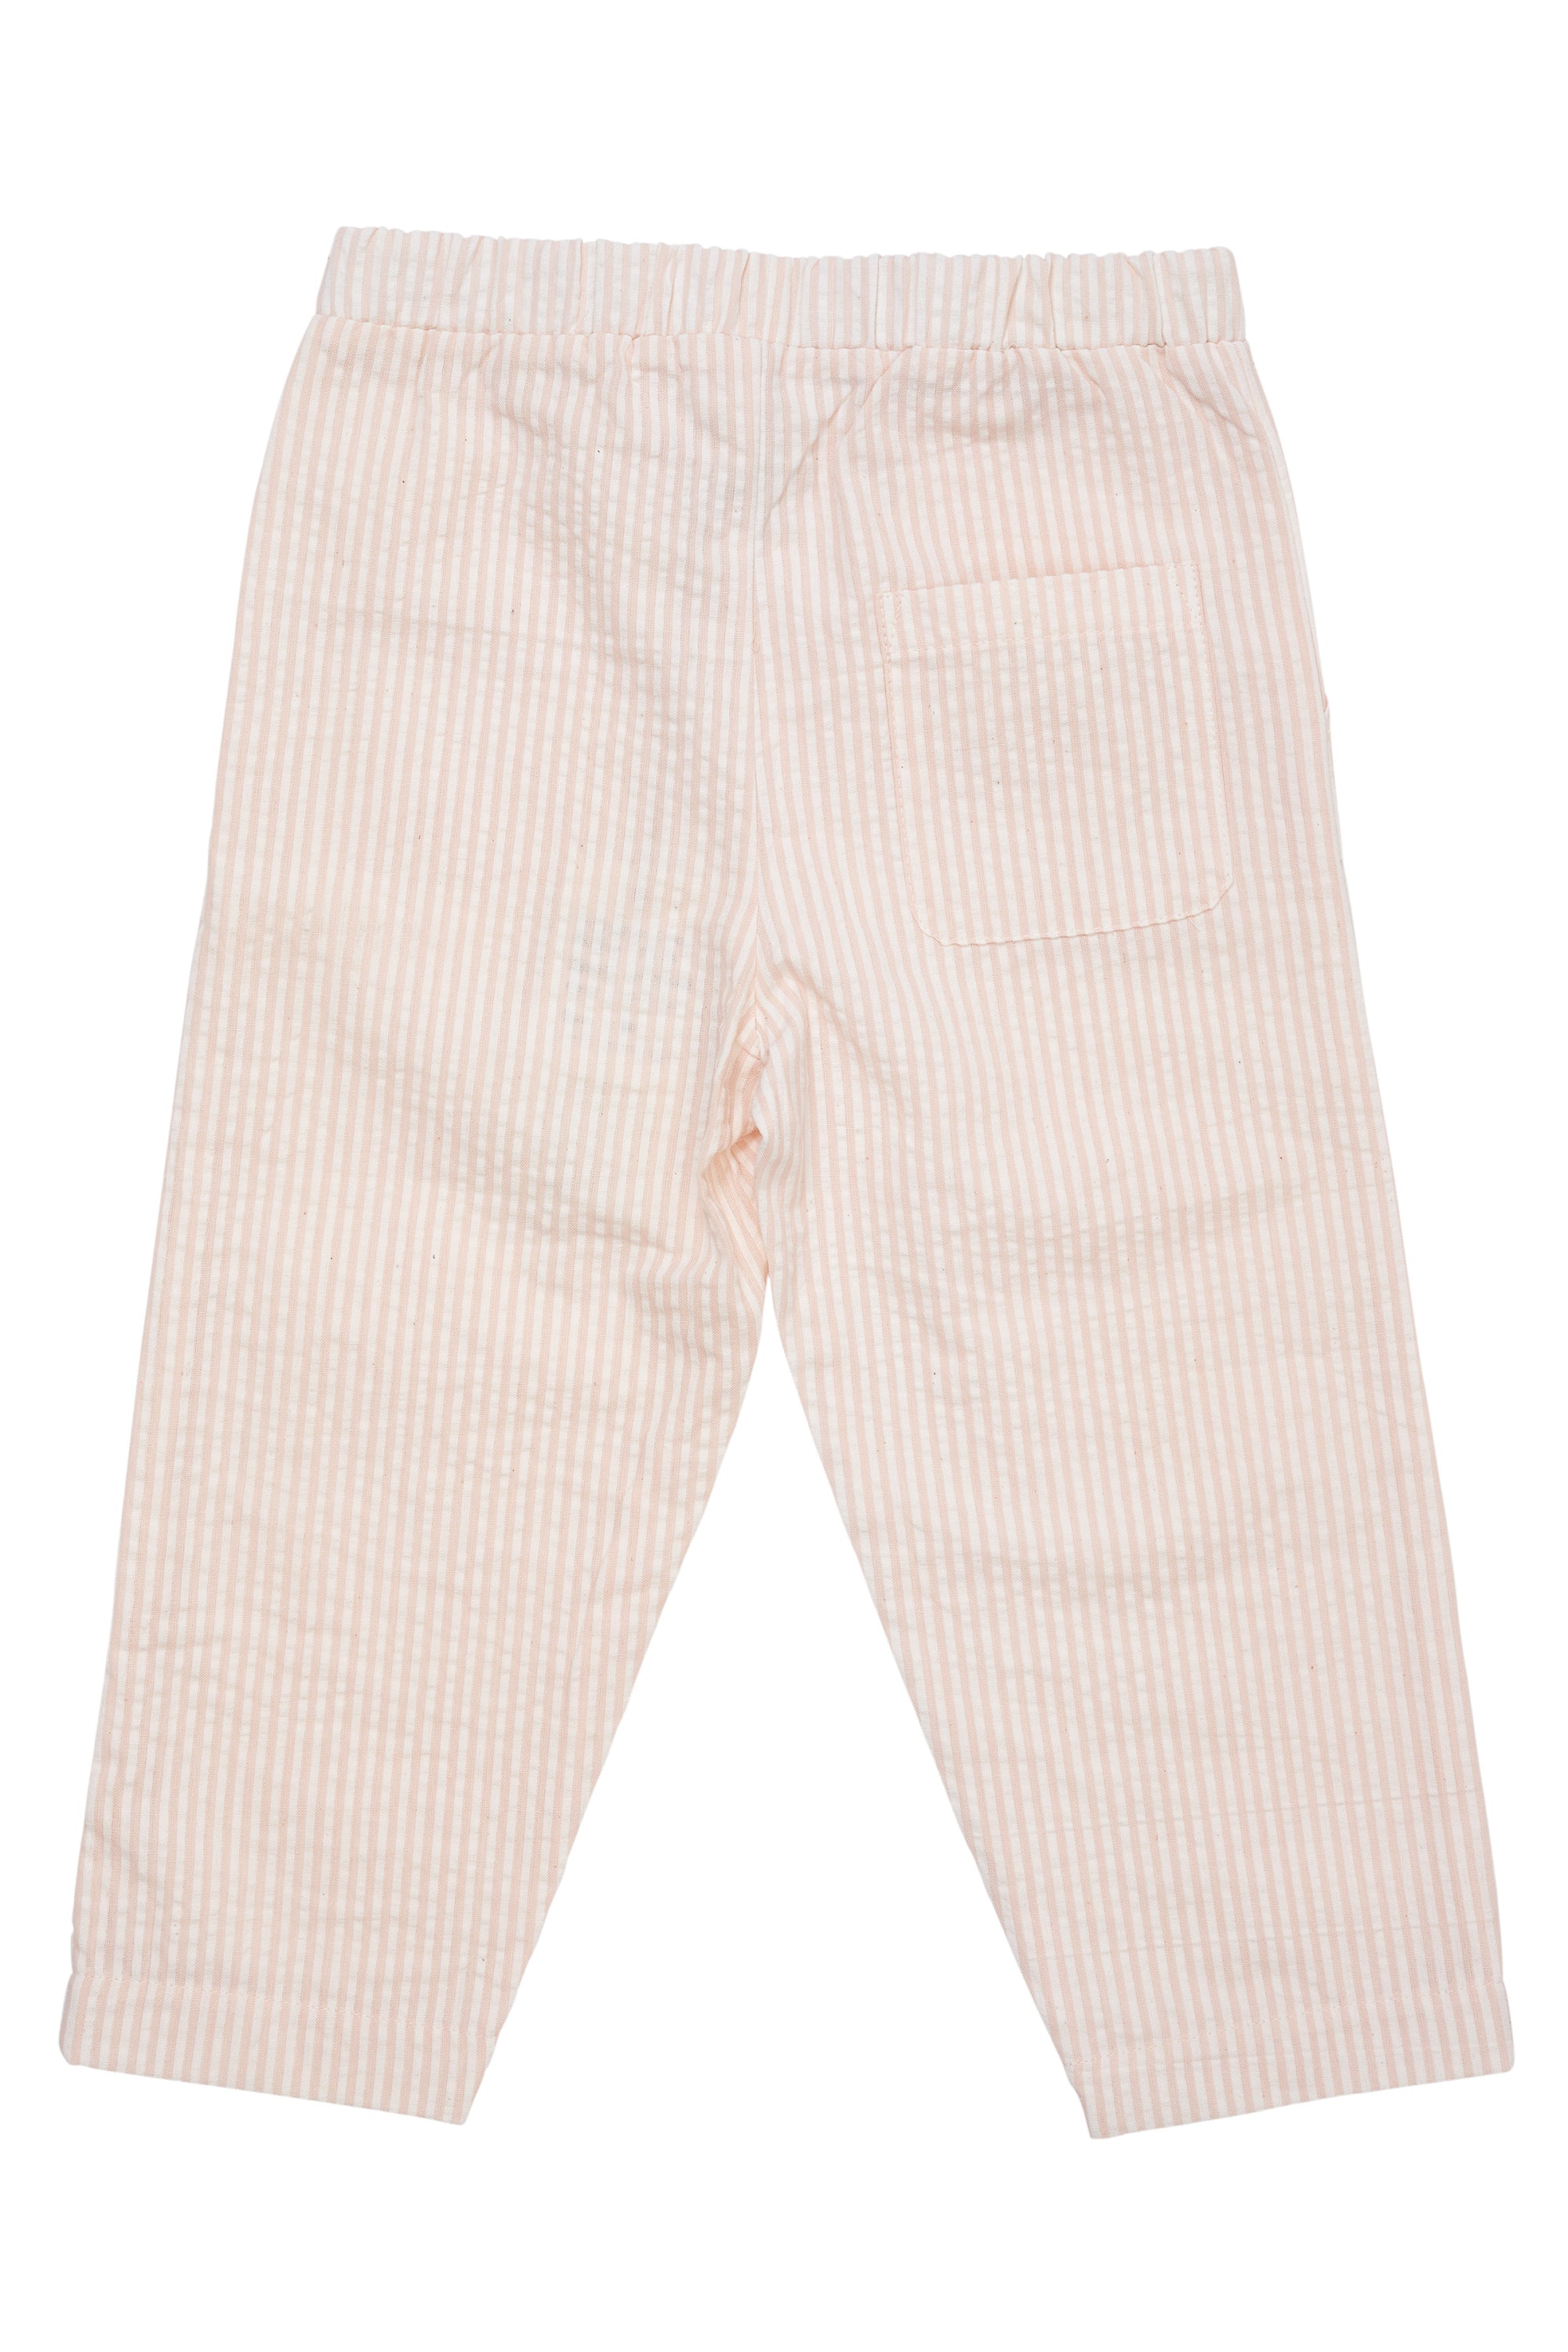 Copenhagen Colors Pants - Dusty Rose/Cream stripe